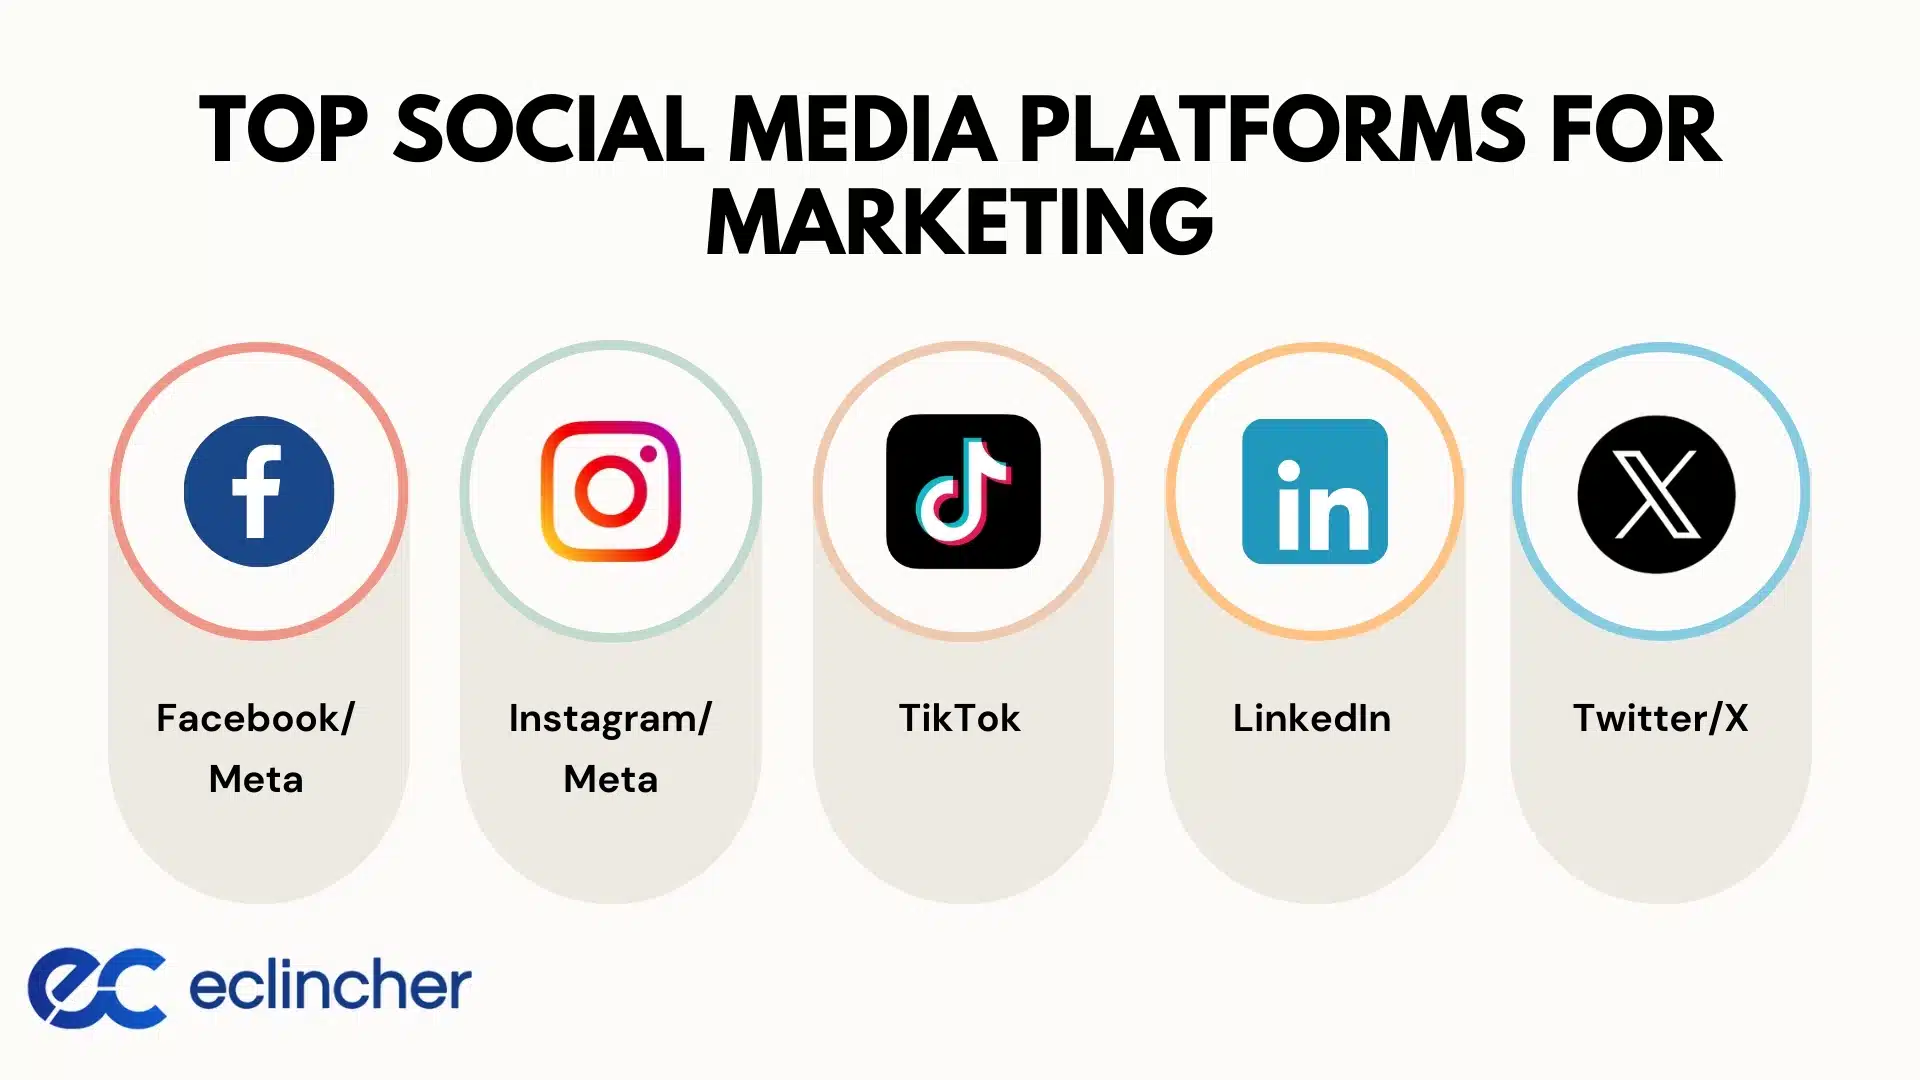 Top Social Media Platforms for Marketing